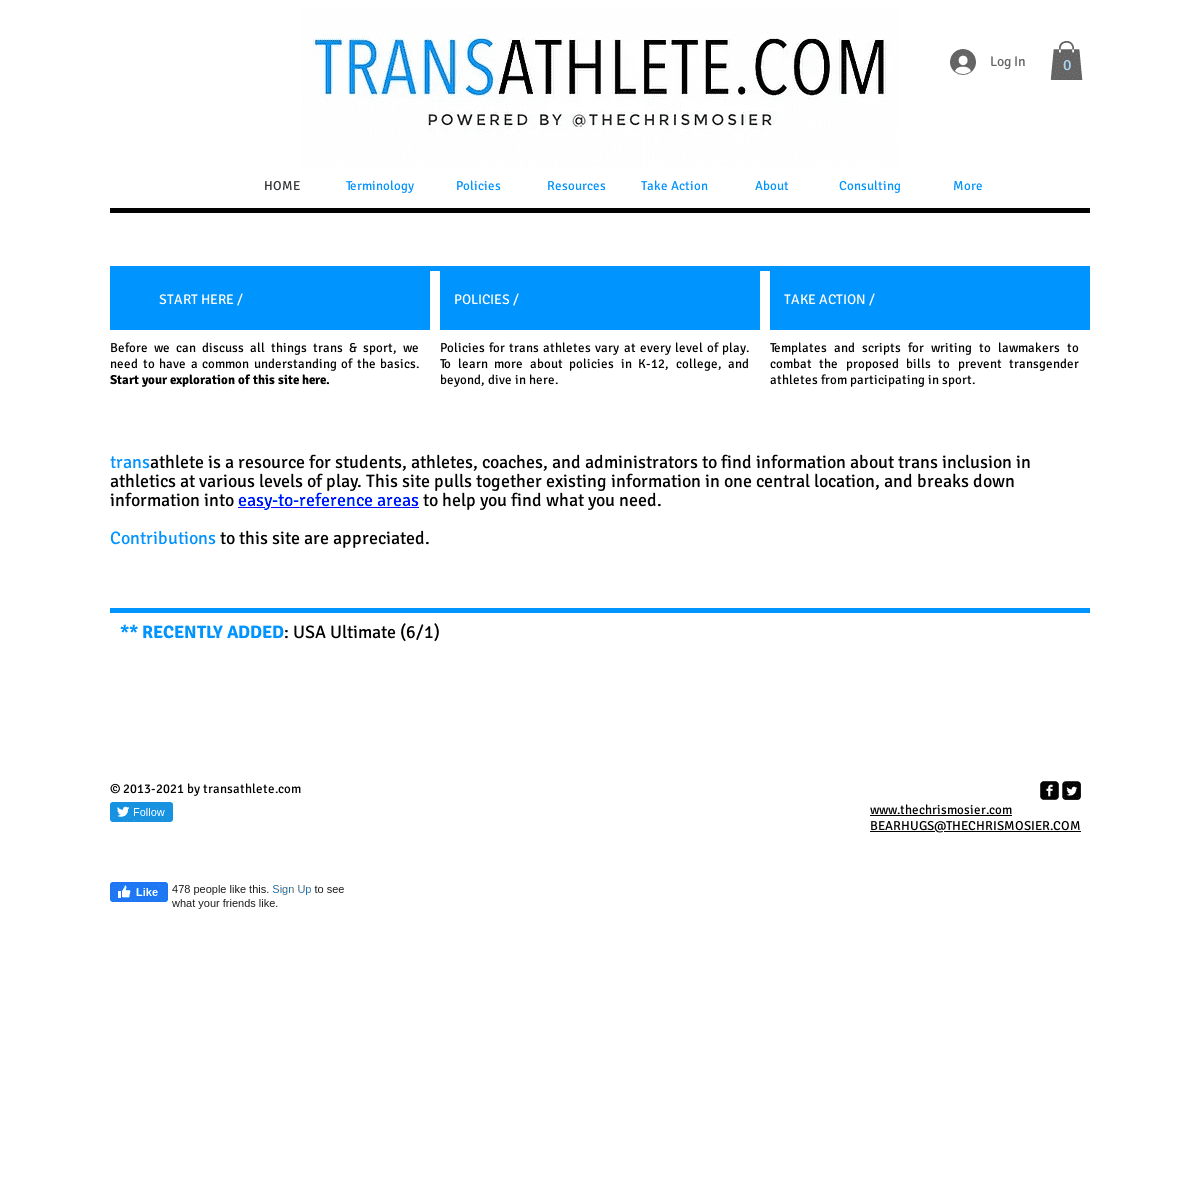 A complete backup of https://transathlete.com